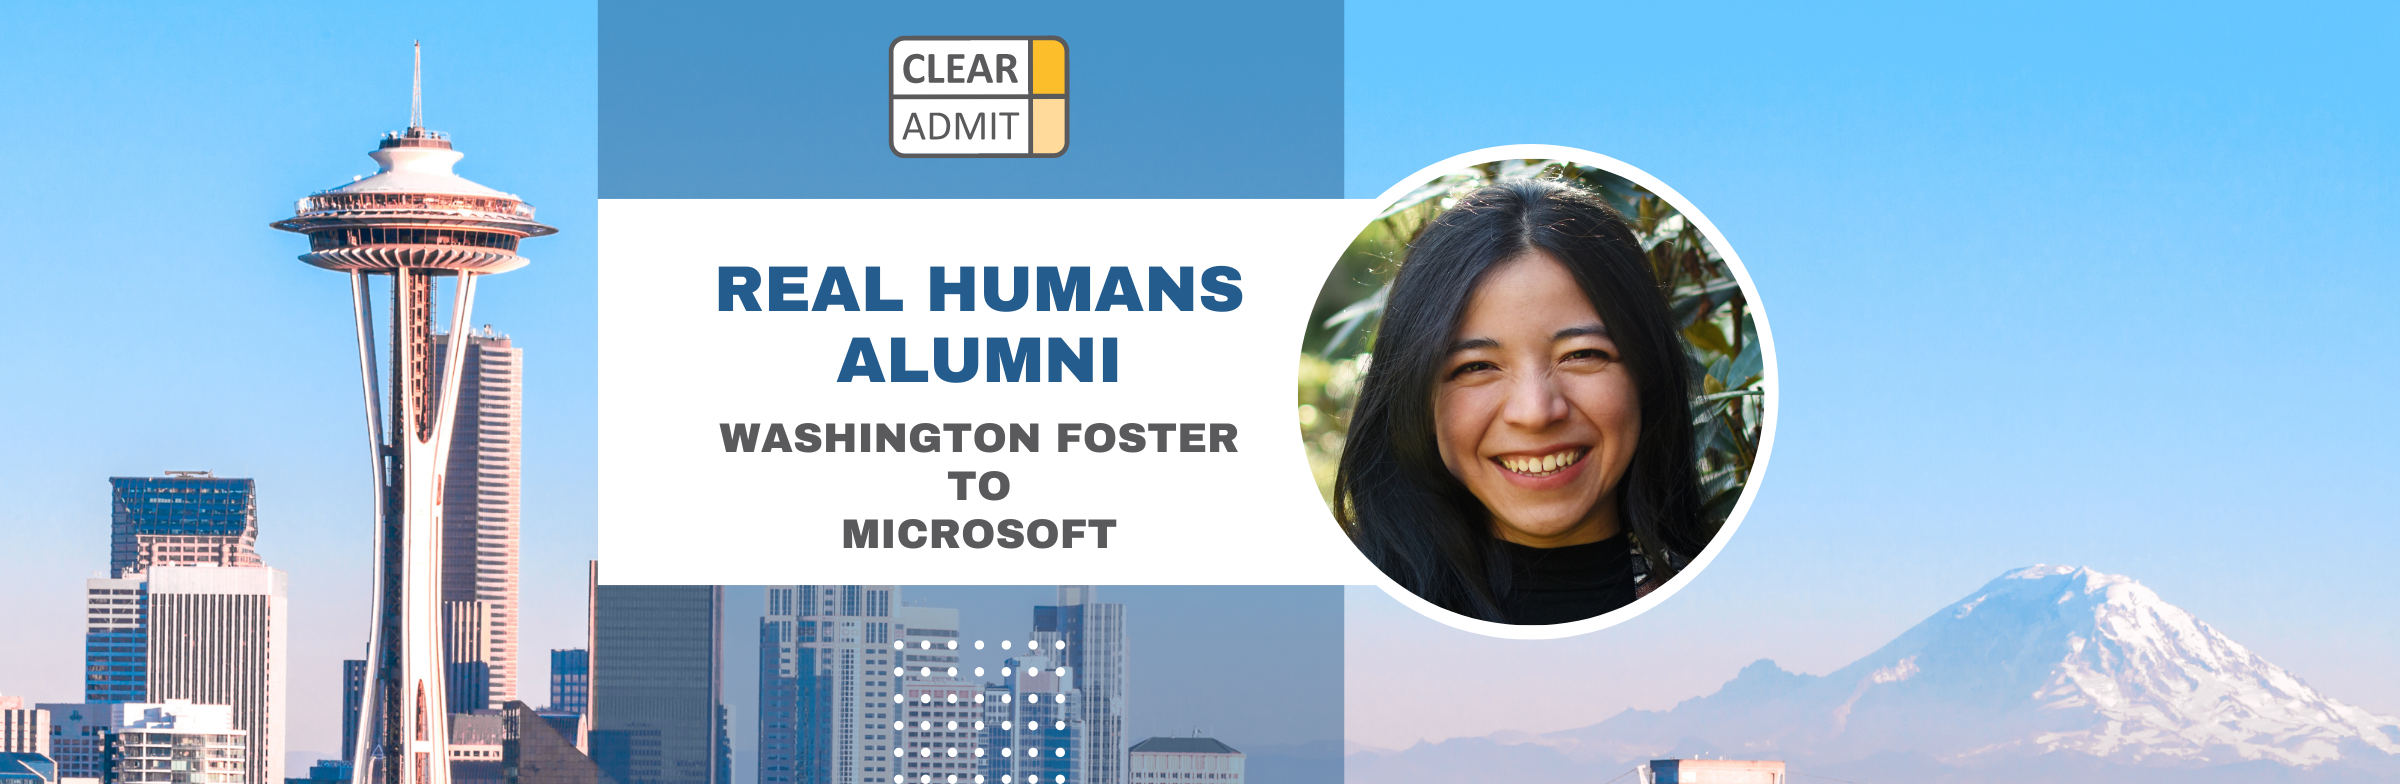 Image for Real Humans of Microsoft: Cynthia Vargas Hernandez, Washington Foster MBA ’23, HR Program Manager